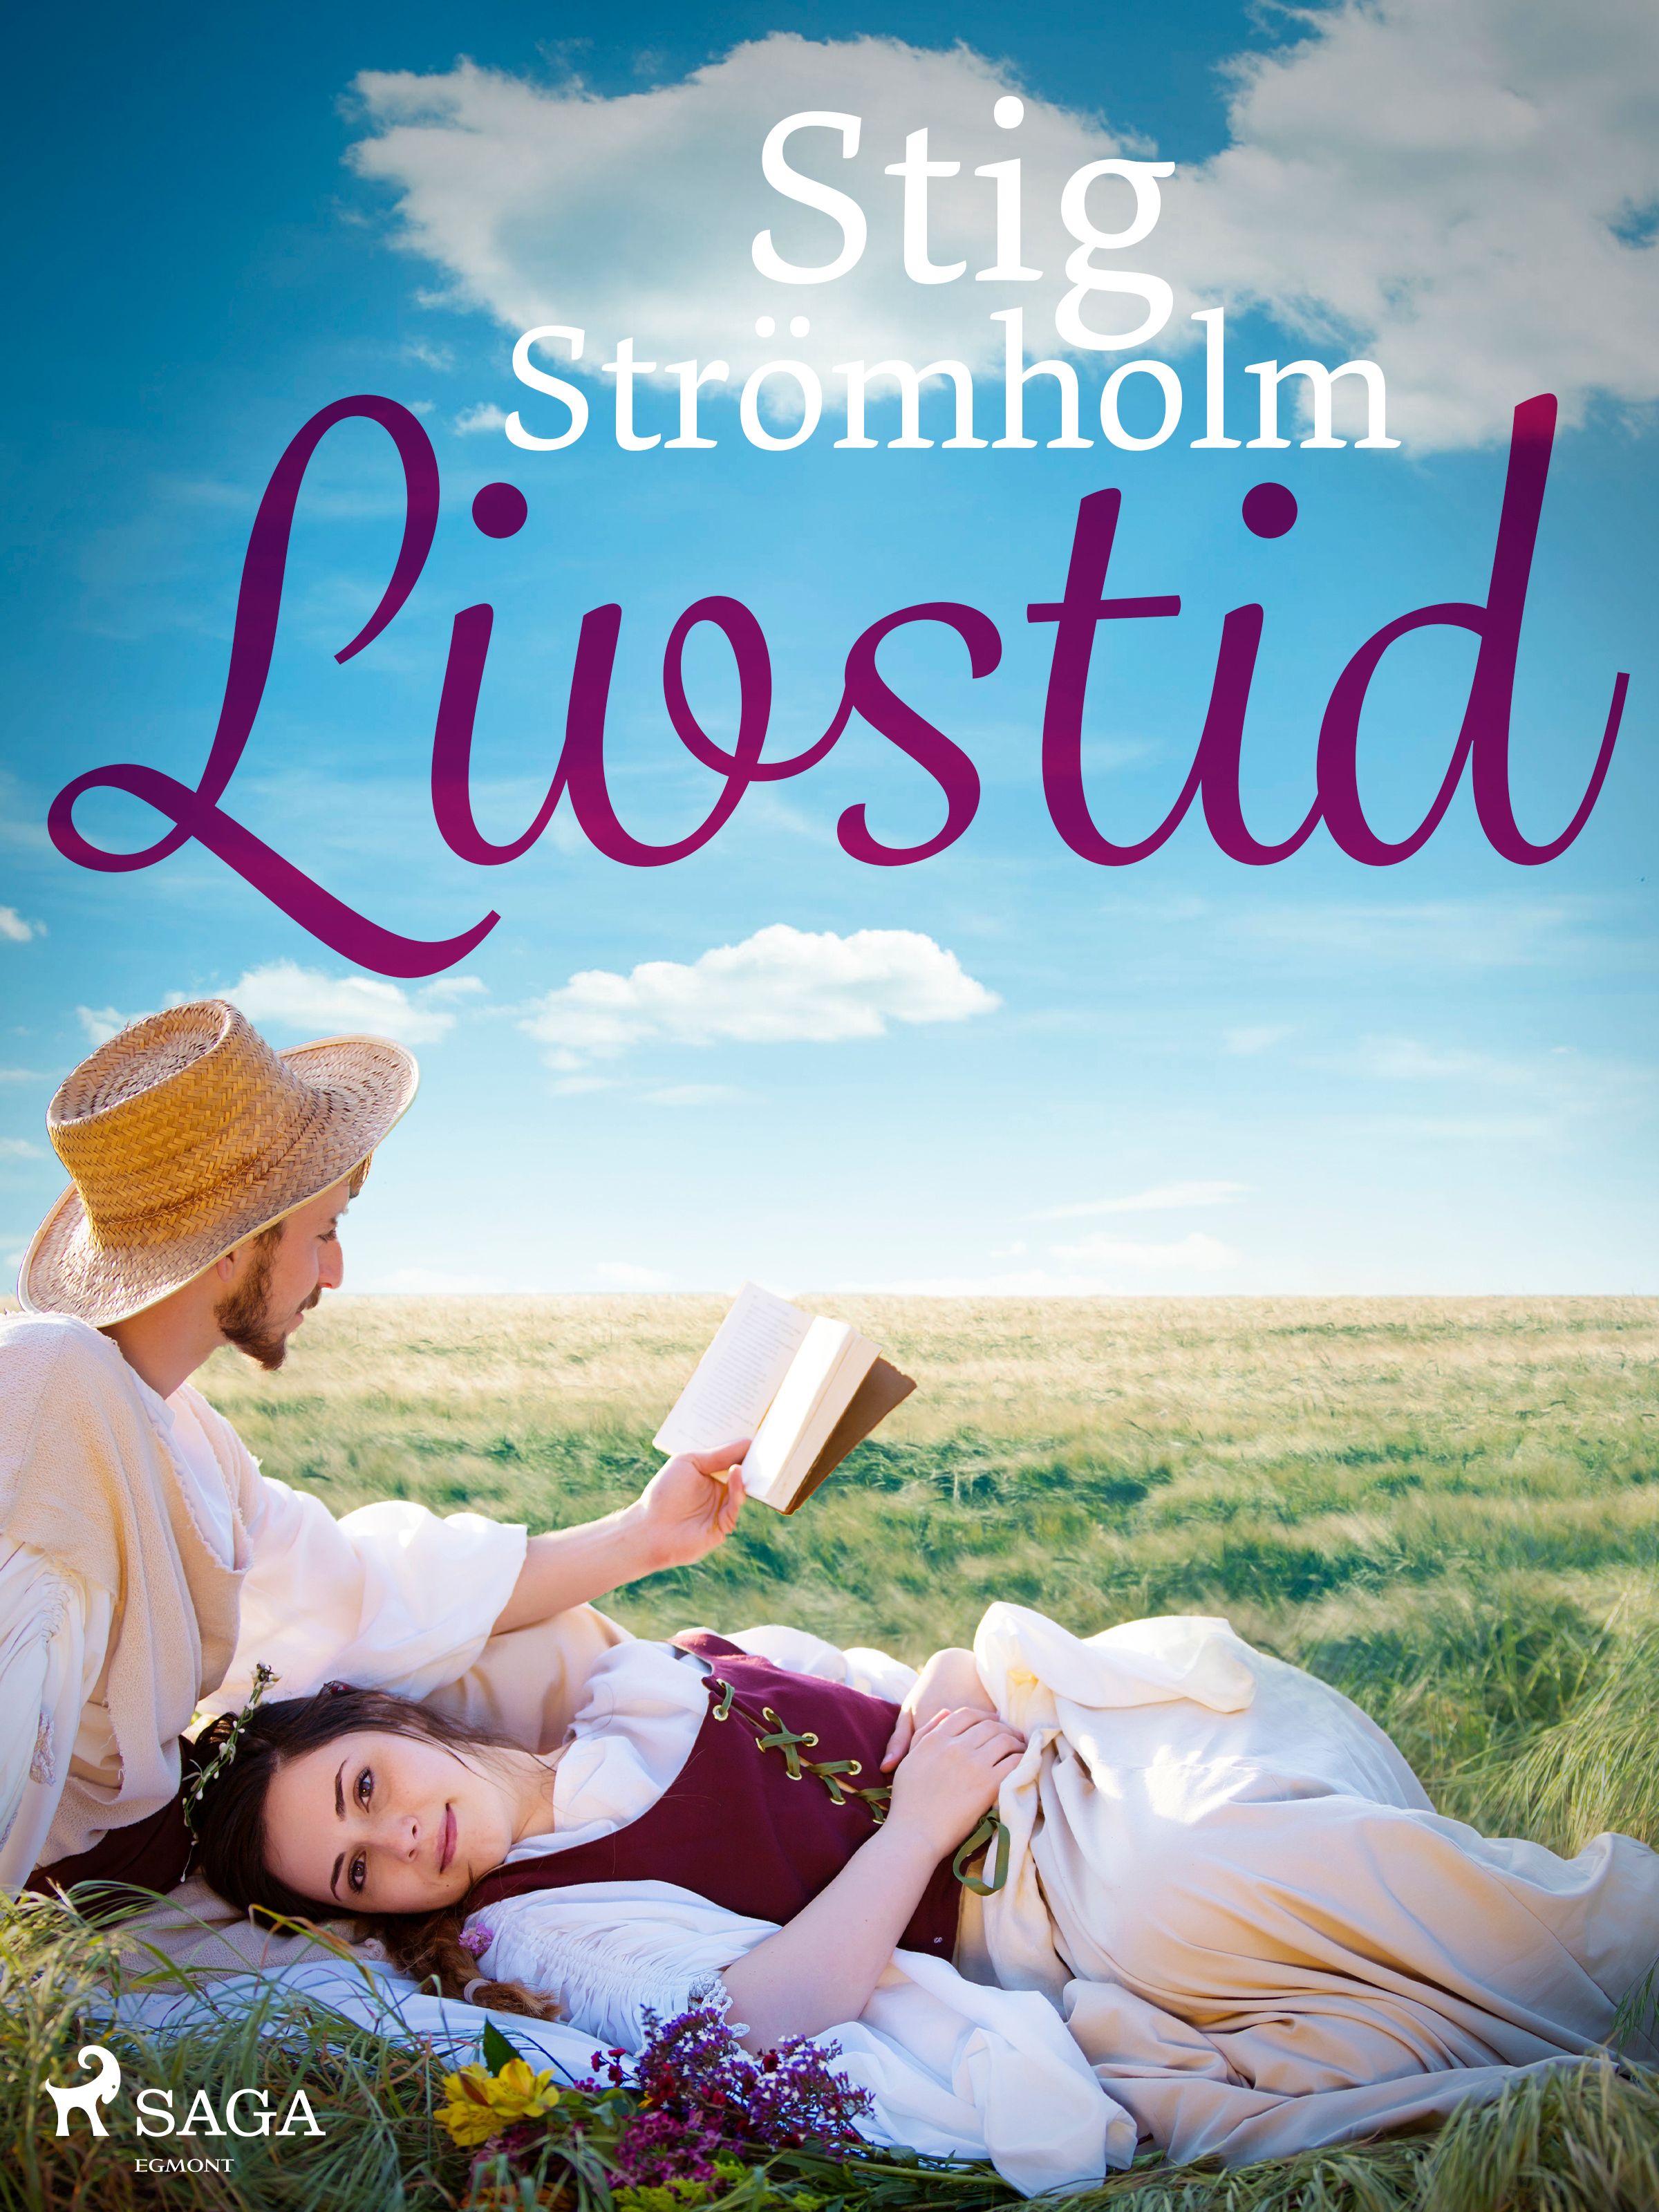 Livstid, e-bok av Stig Strömholm